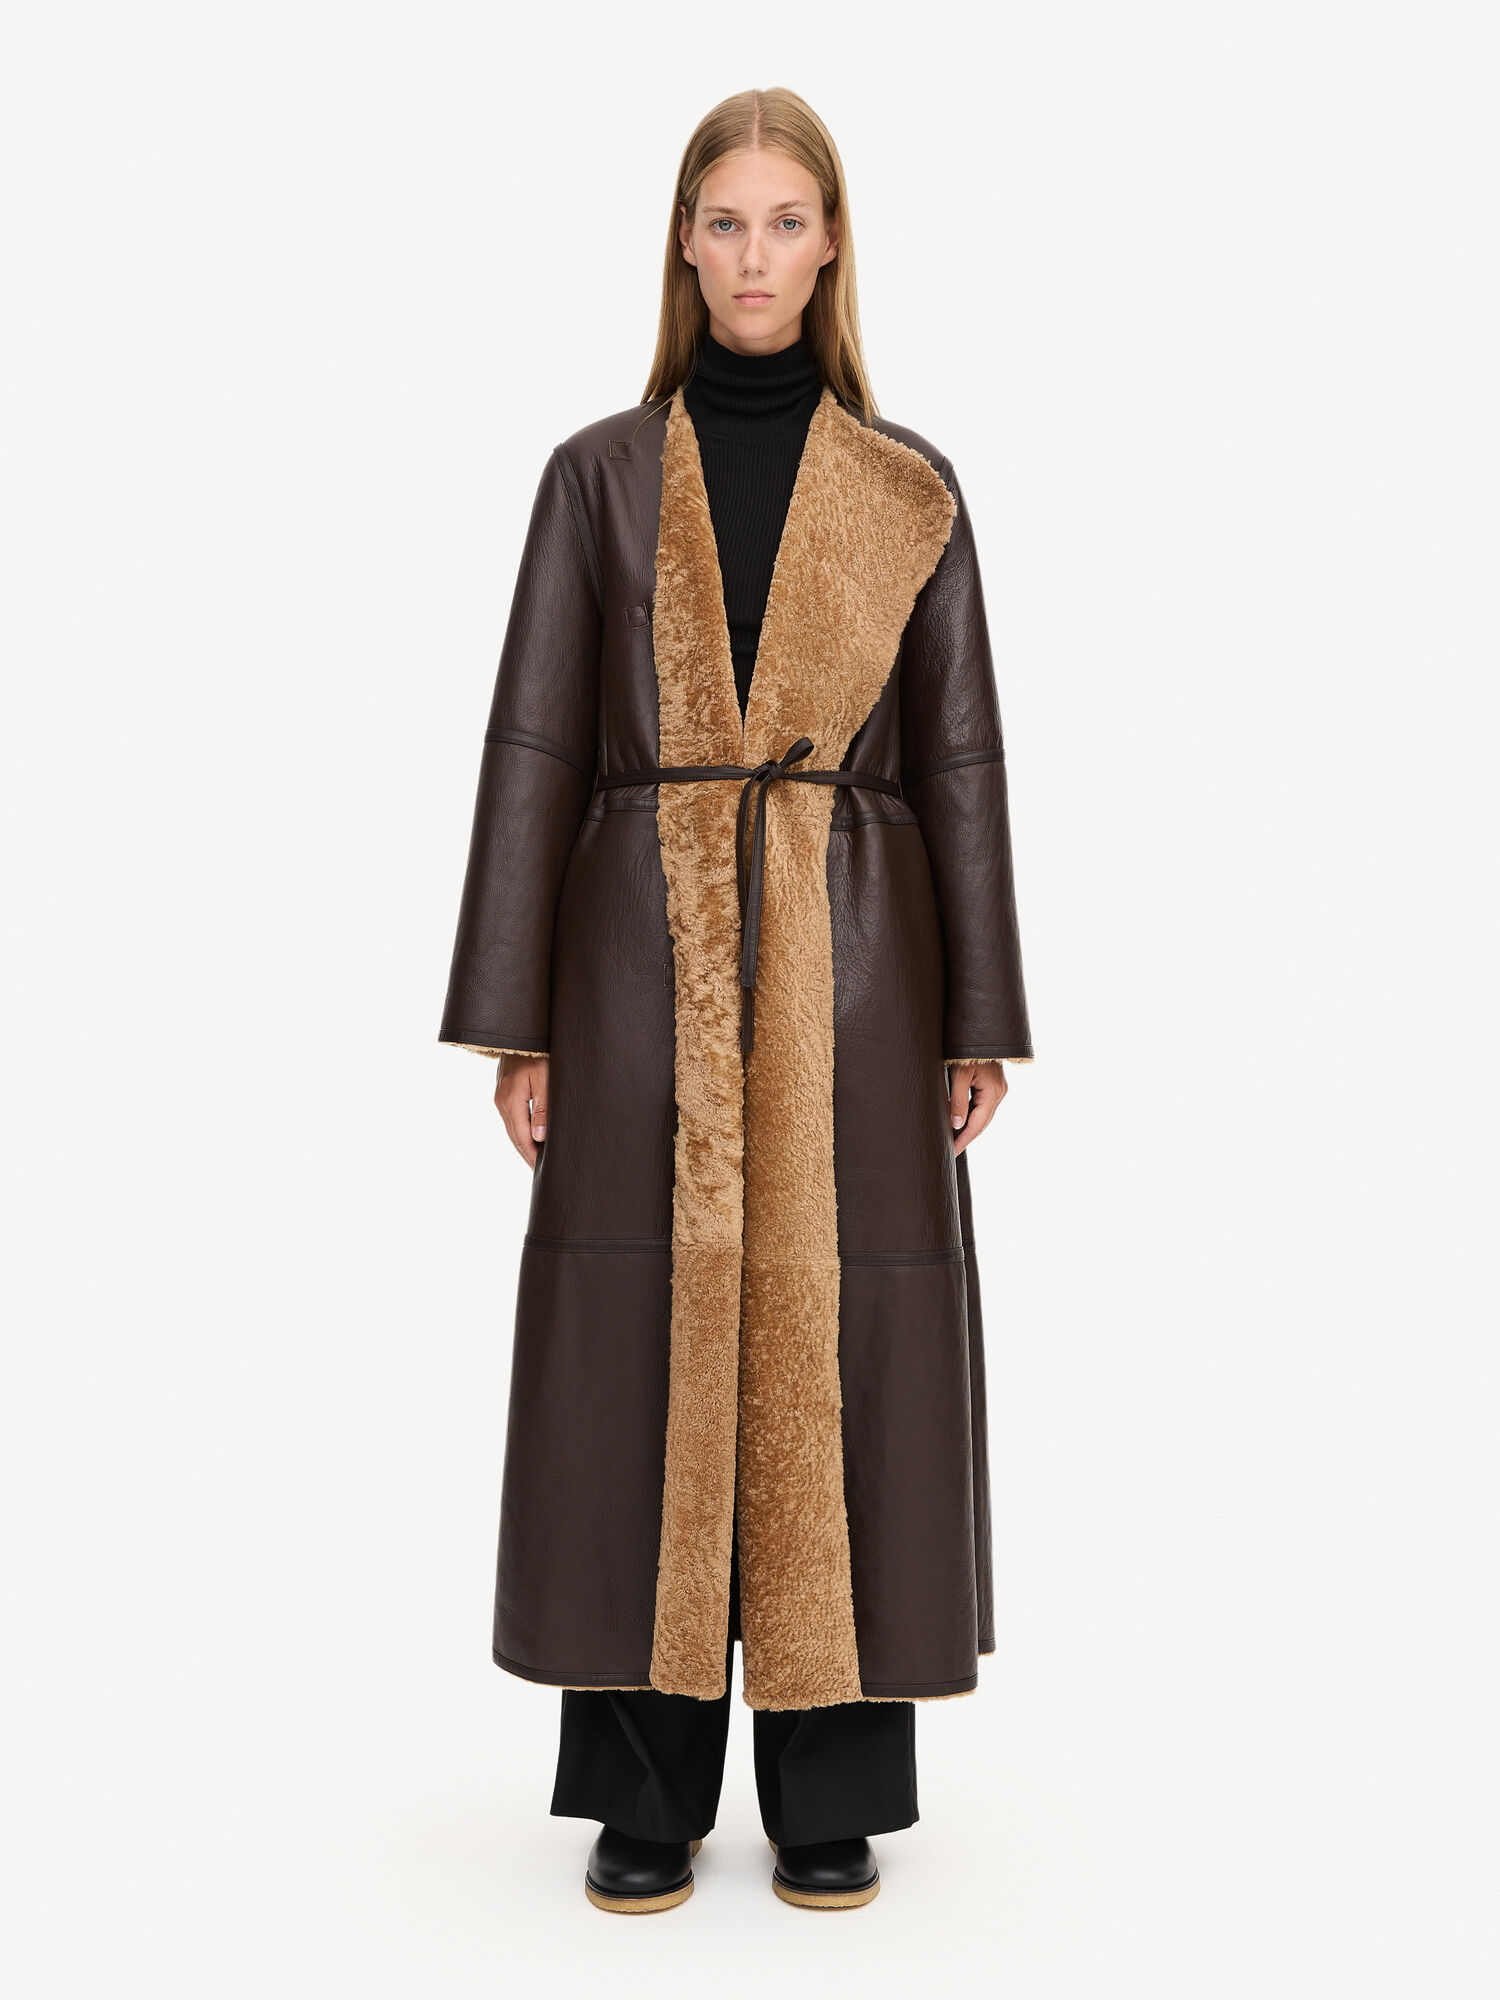 Sandras shearling coat